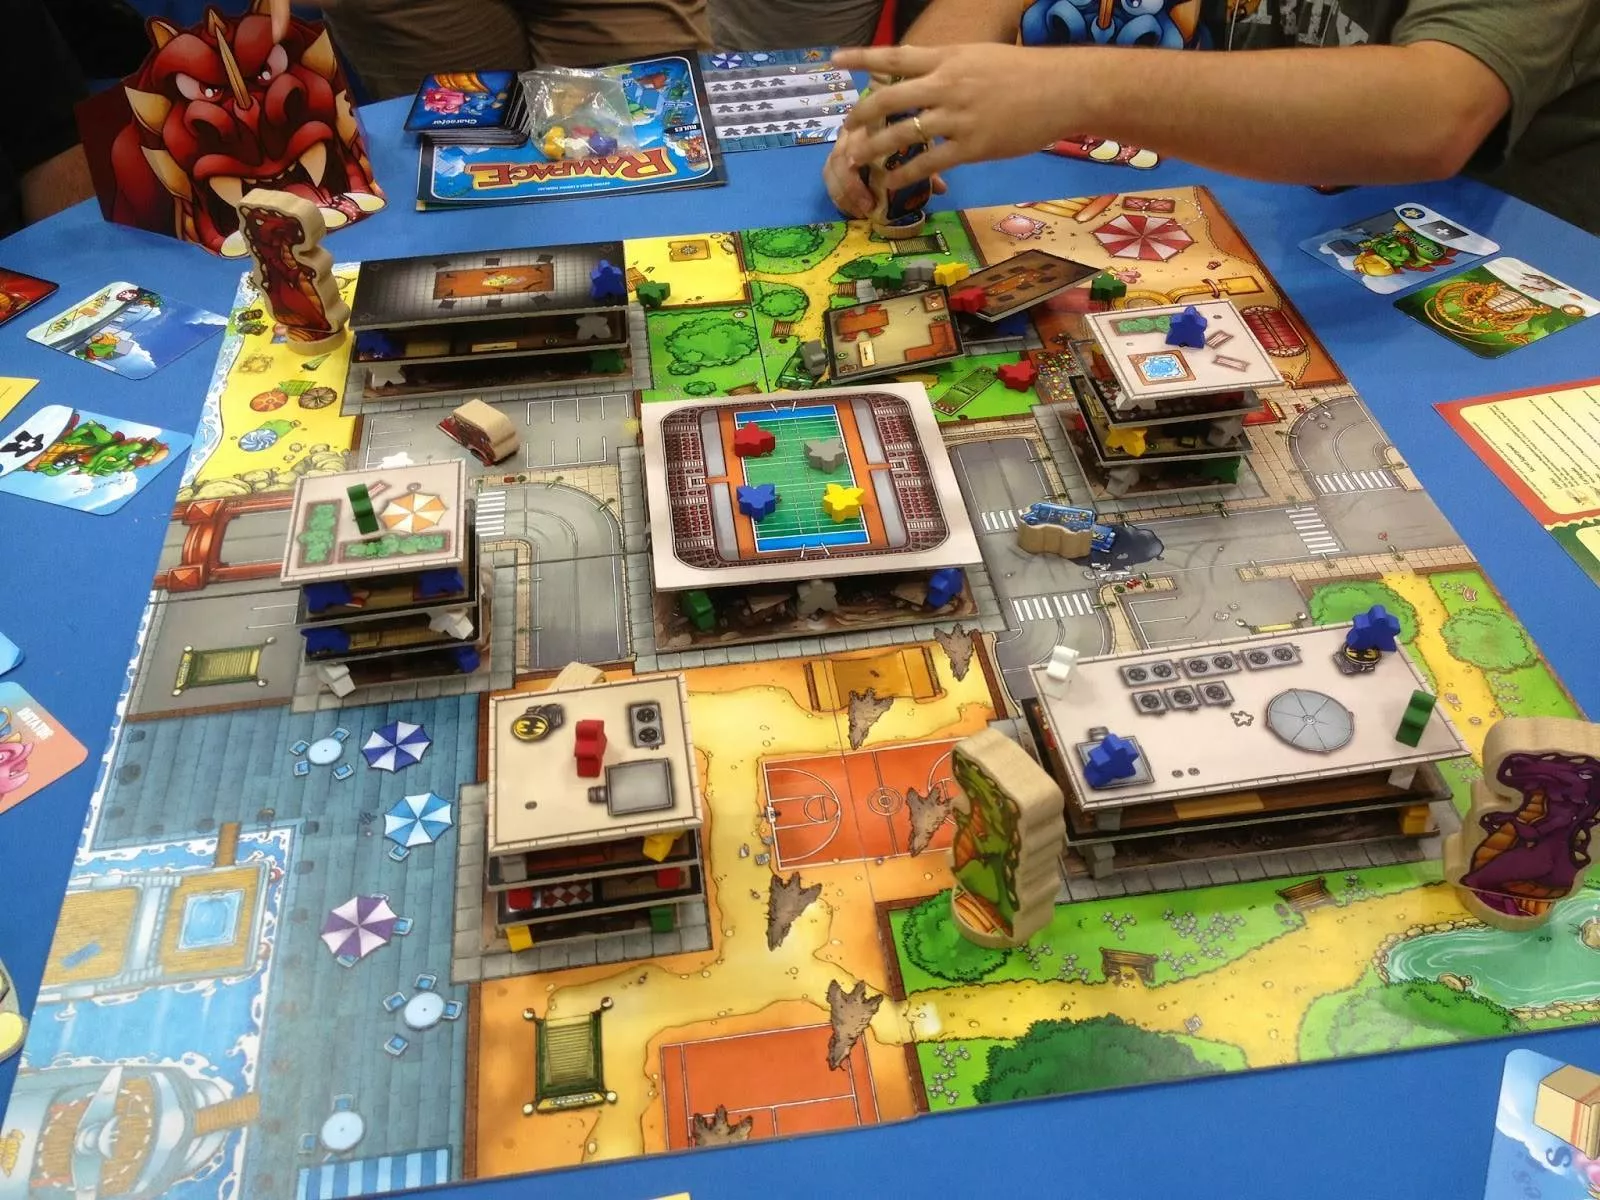 Daisu Board Game Cafe in Costa Rica, North America | Tabletop Games - Rated 1.6